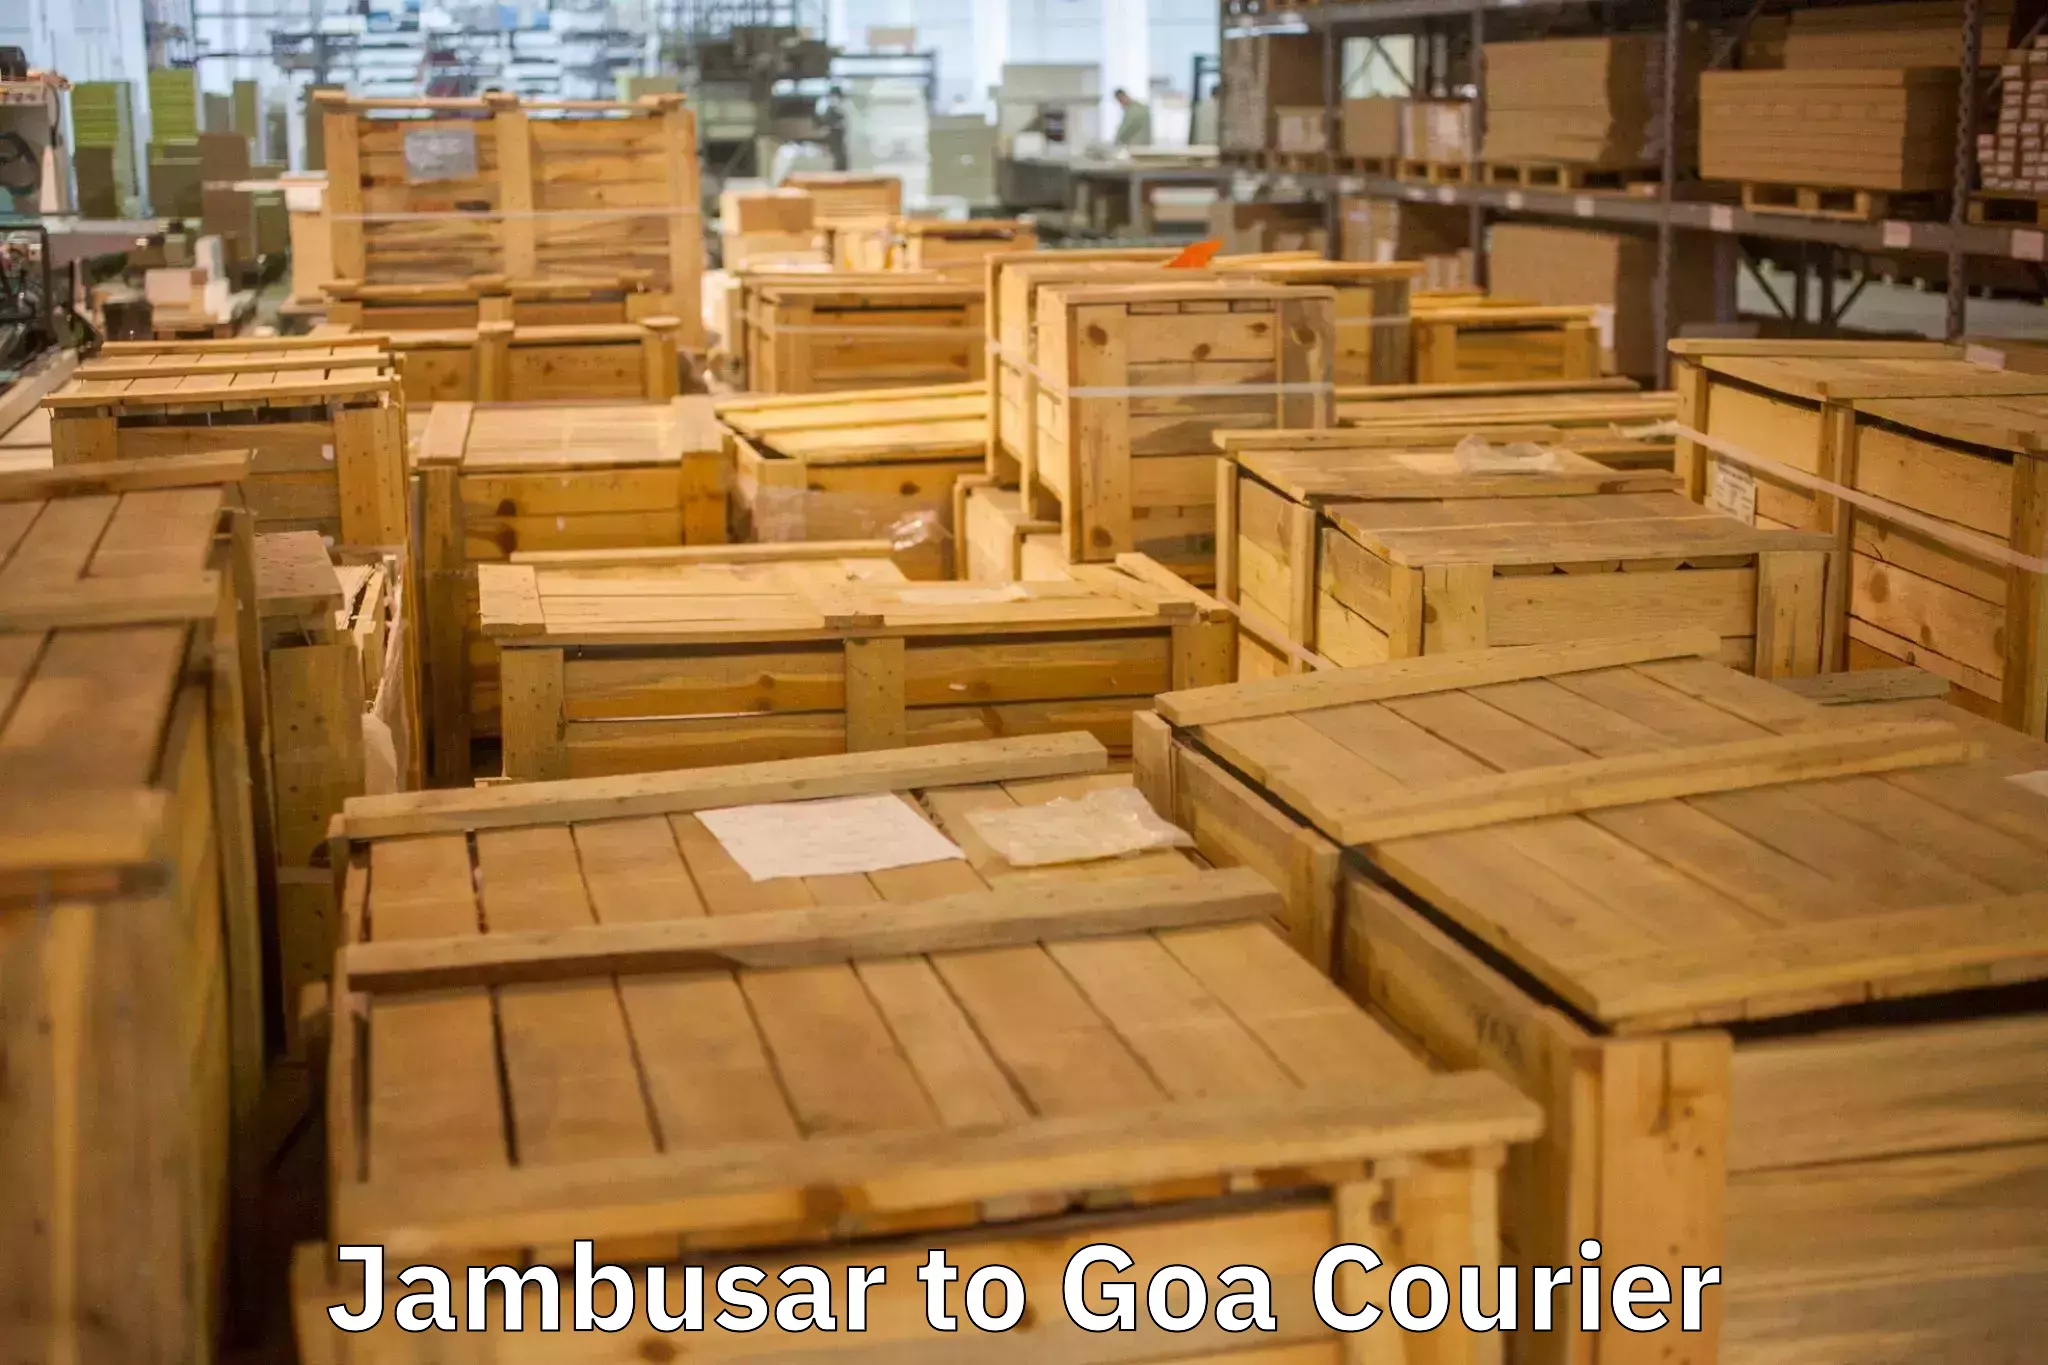 Professional moving company Jambusar to Goa